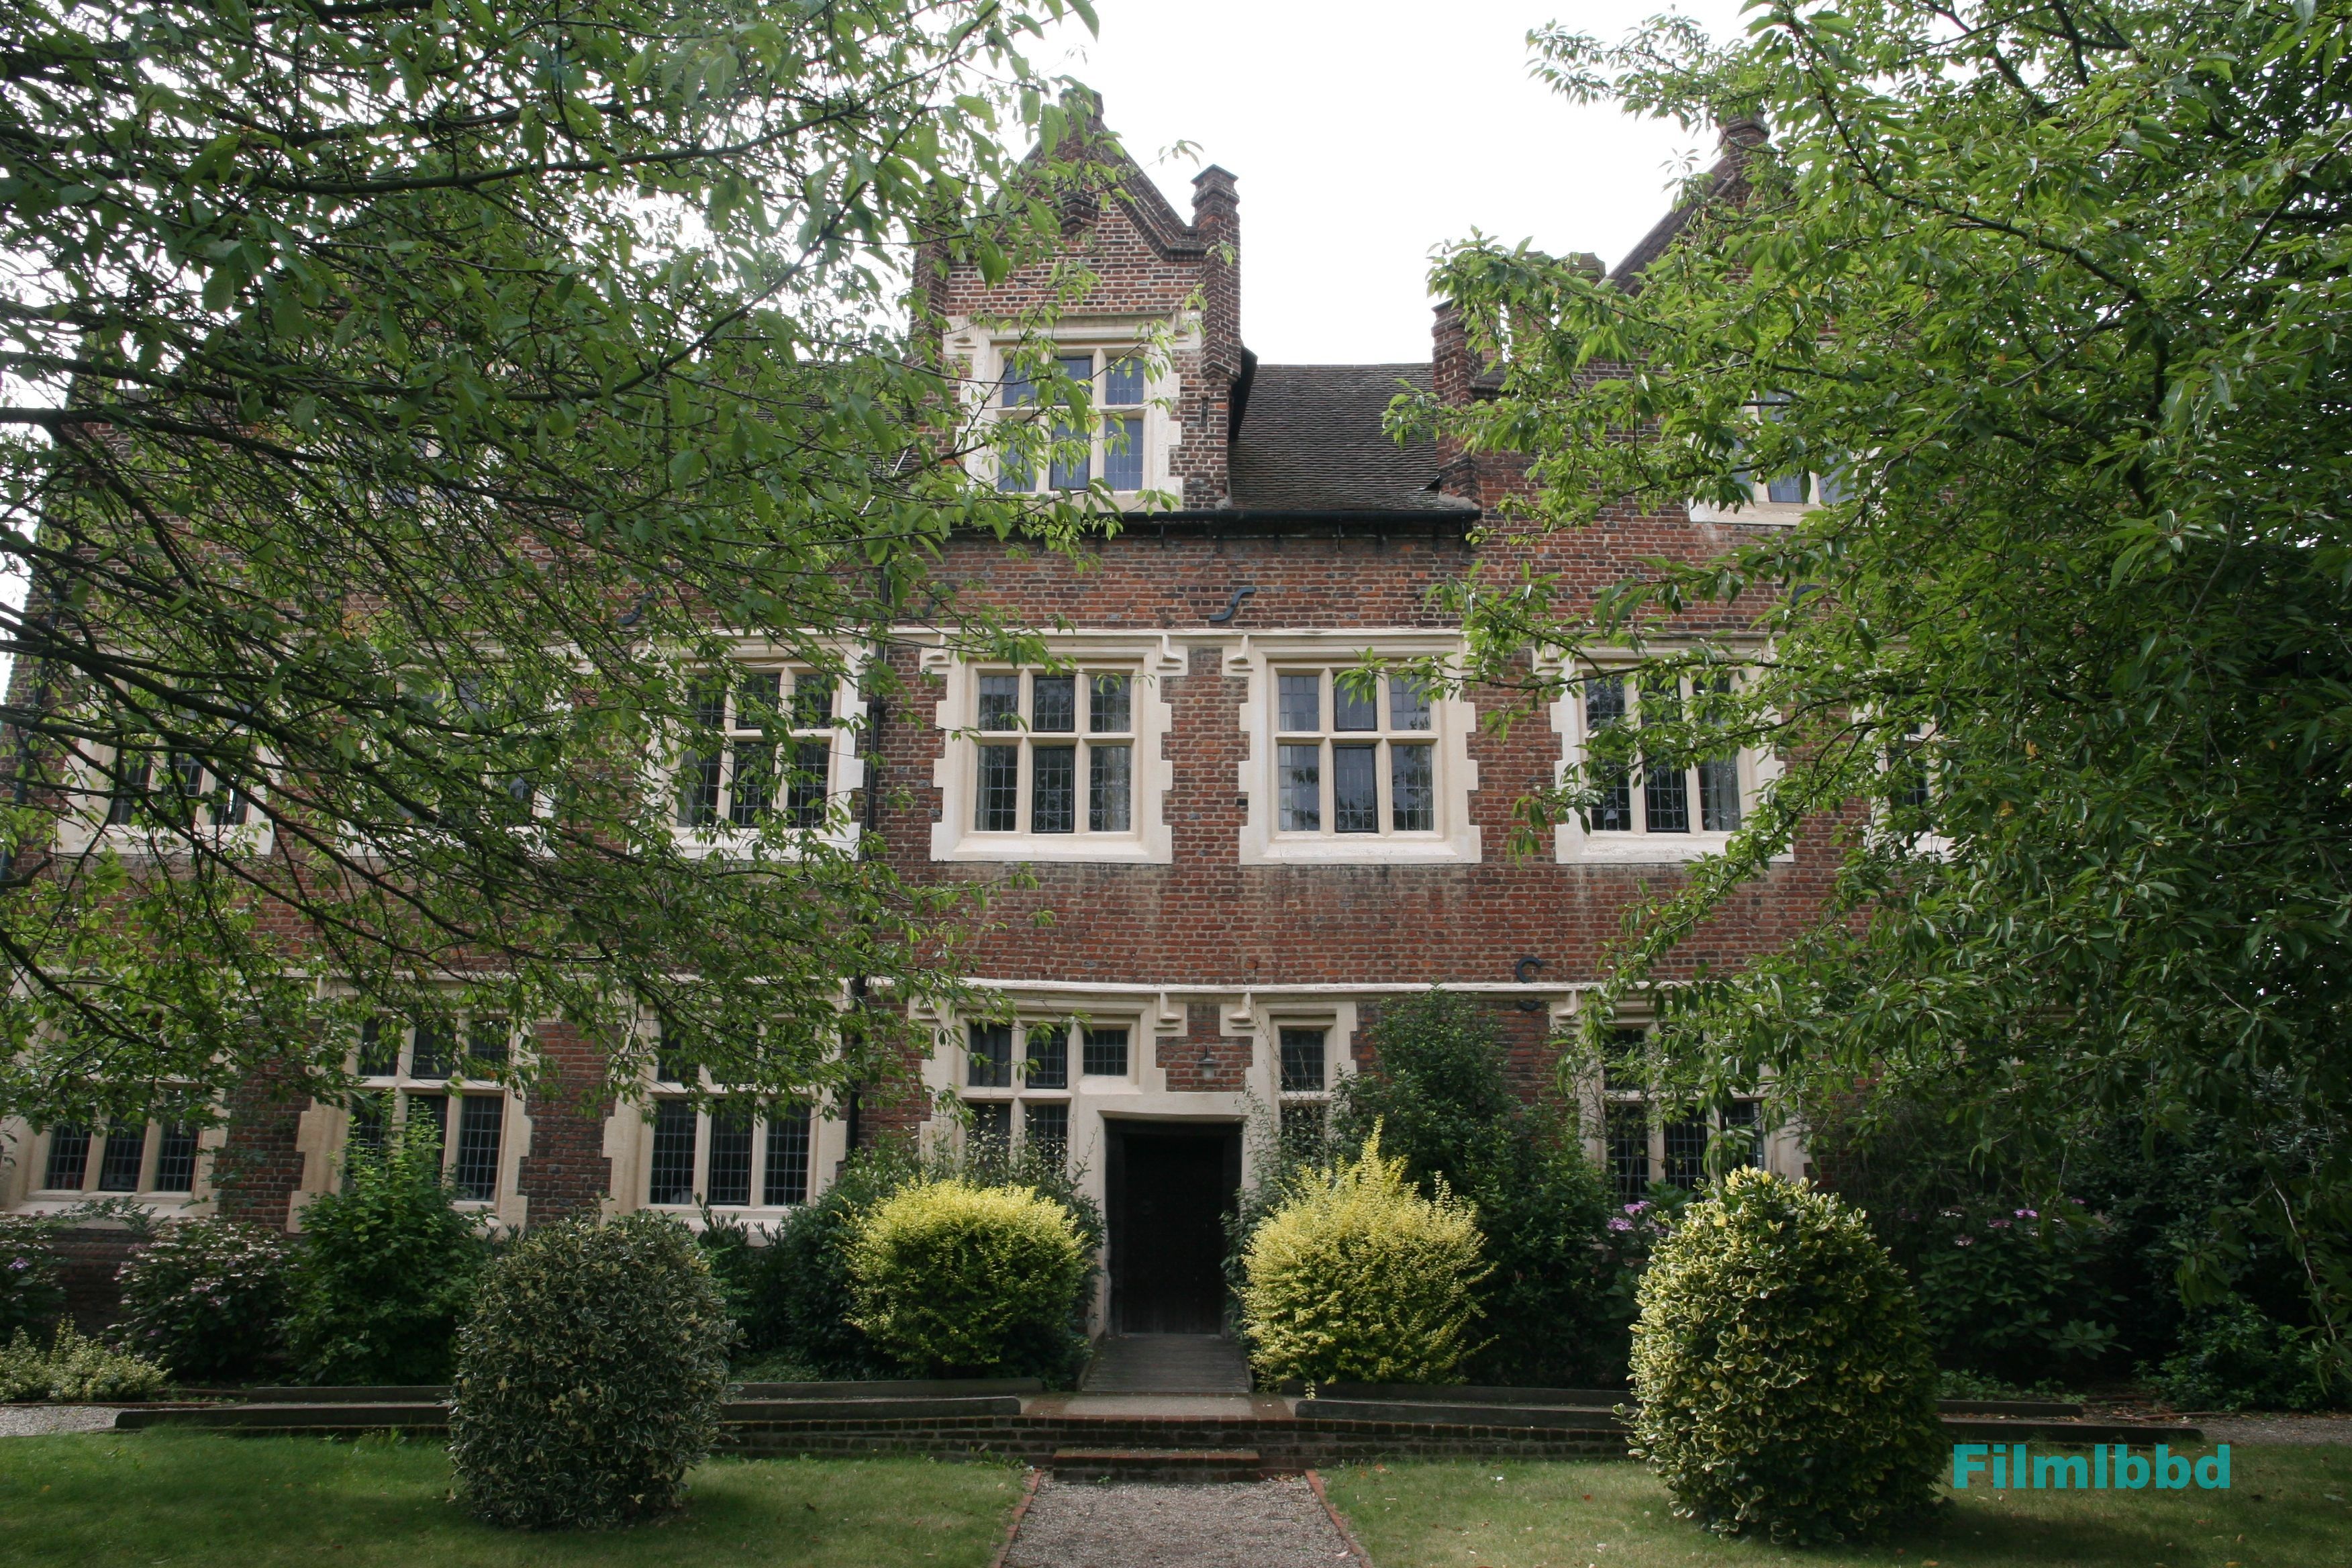 Eastbury Manor House | filmlbbd